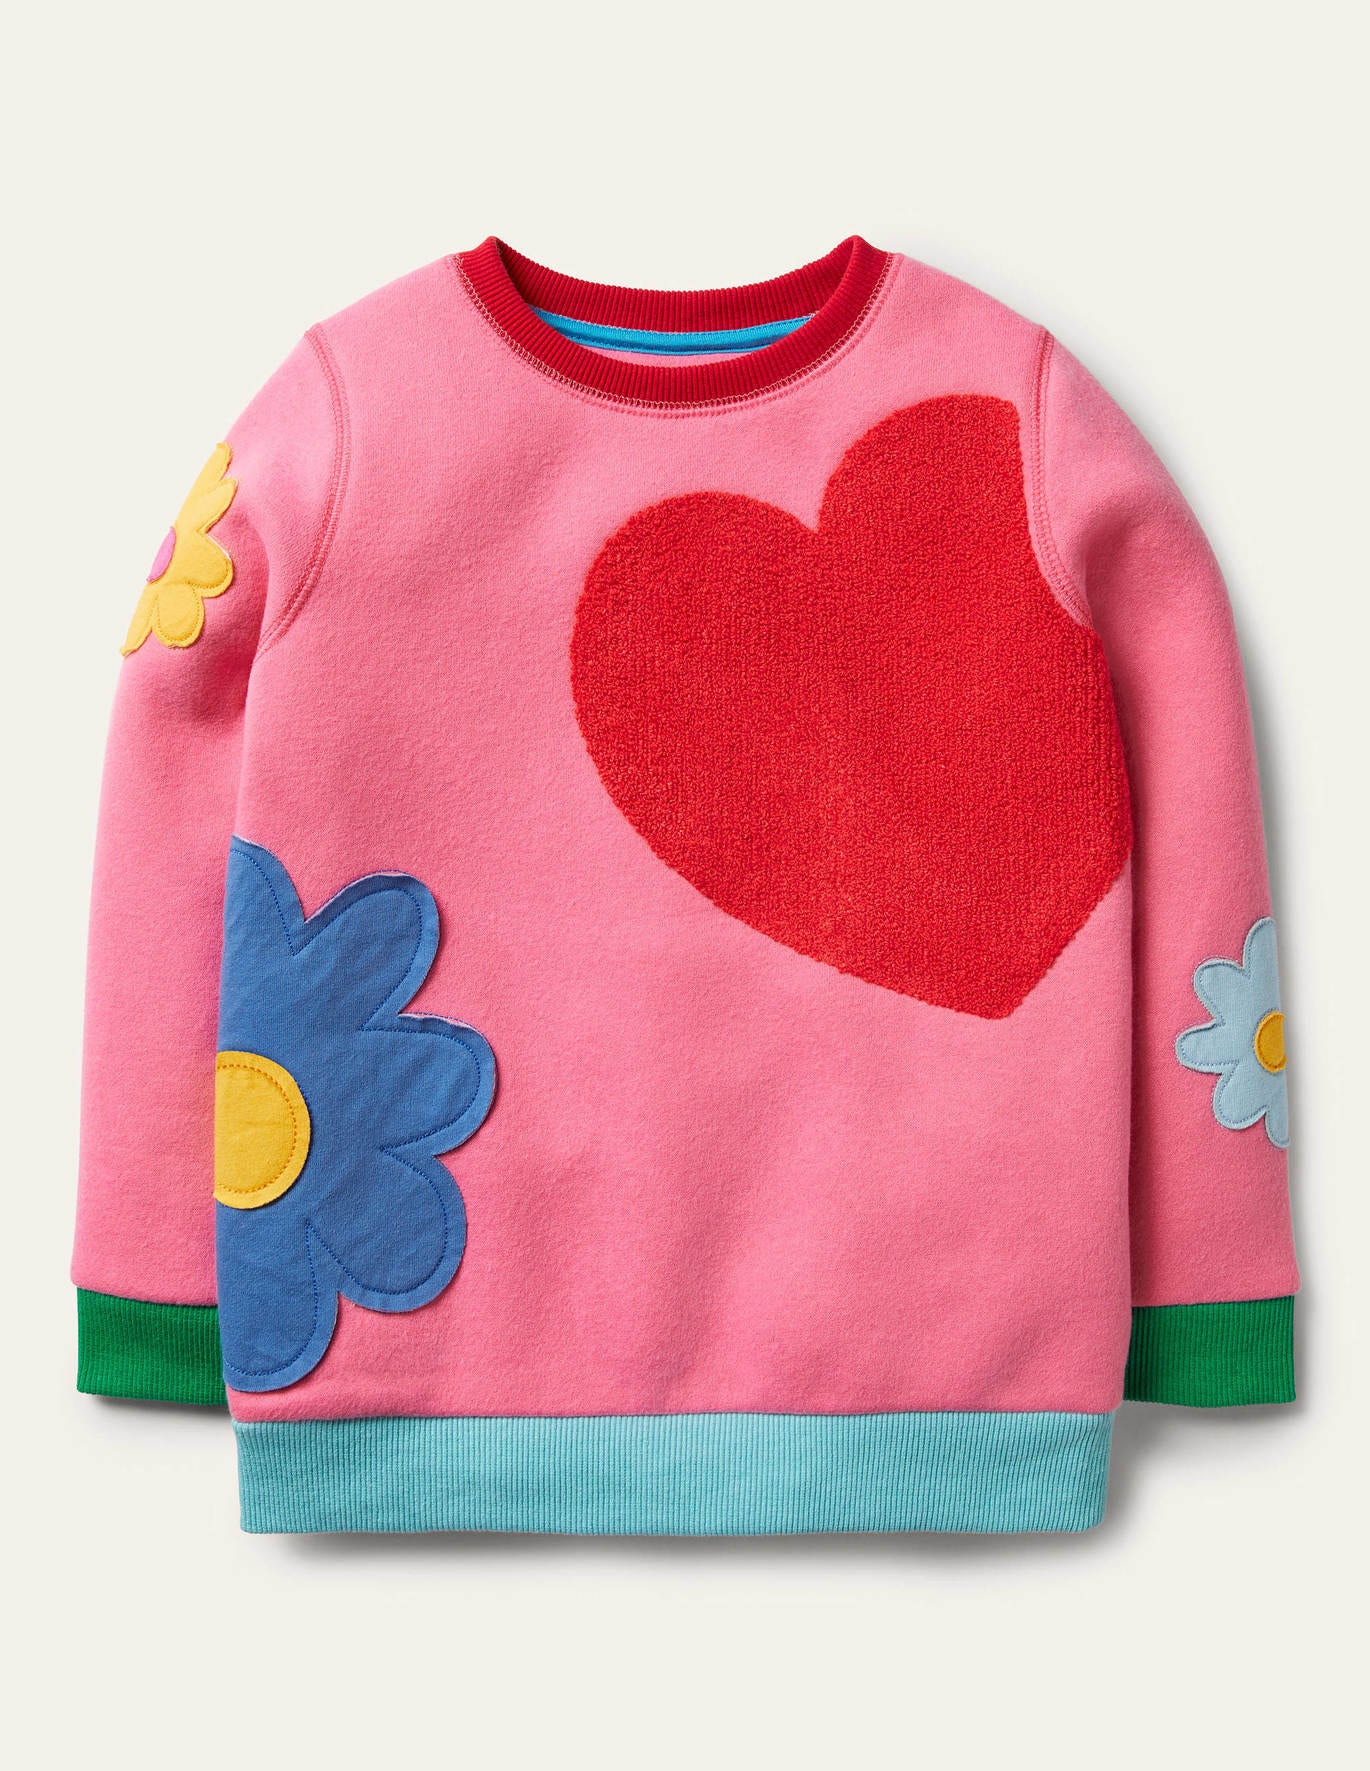 Boden Applique Sweatshirt - Bright Petal Pink Heart